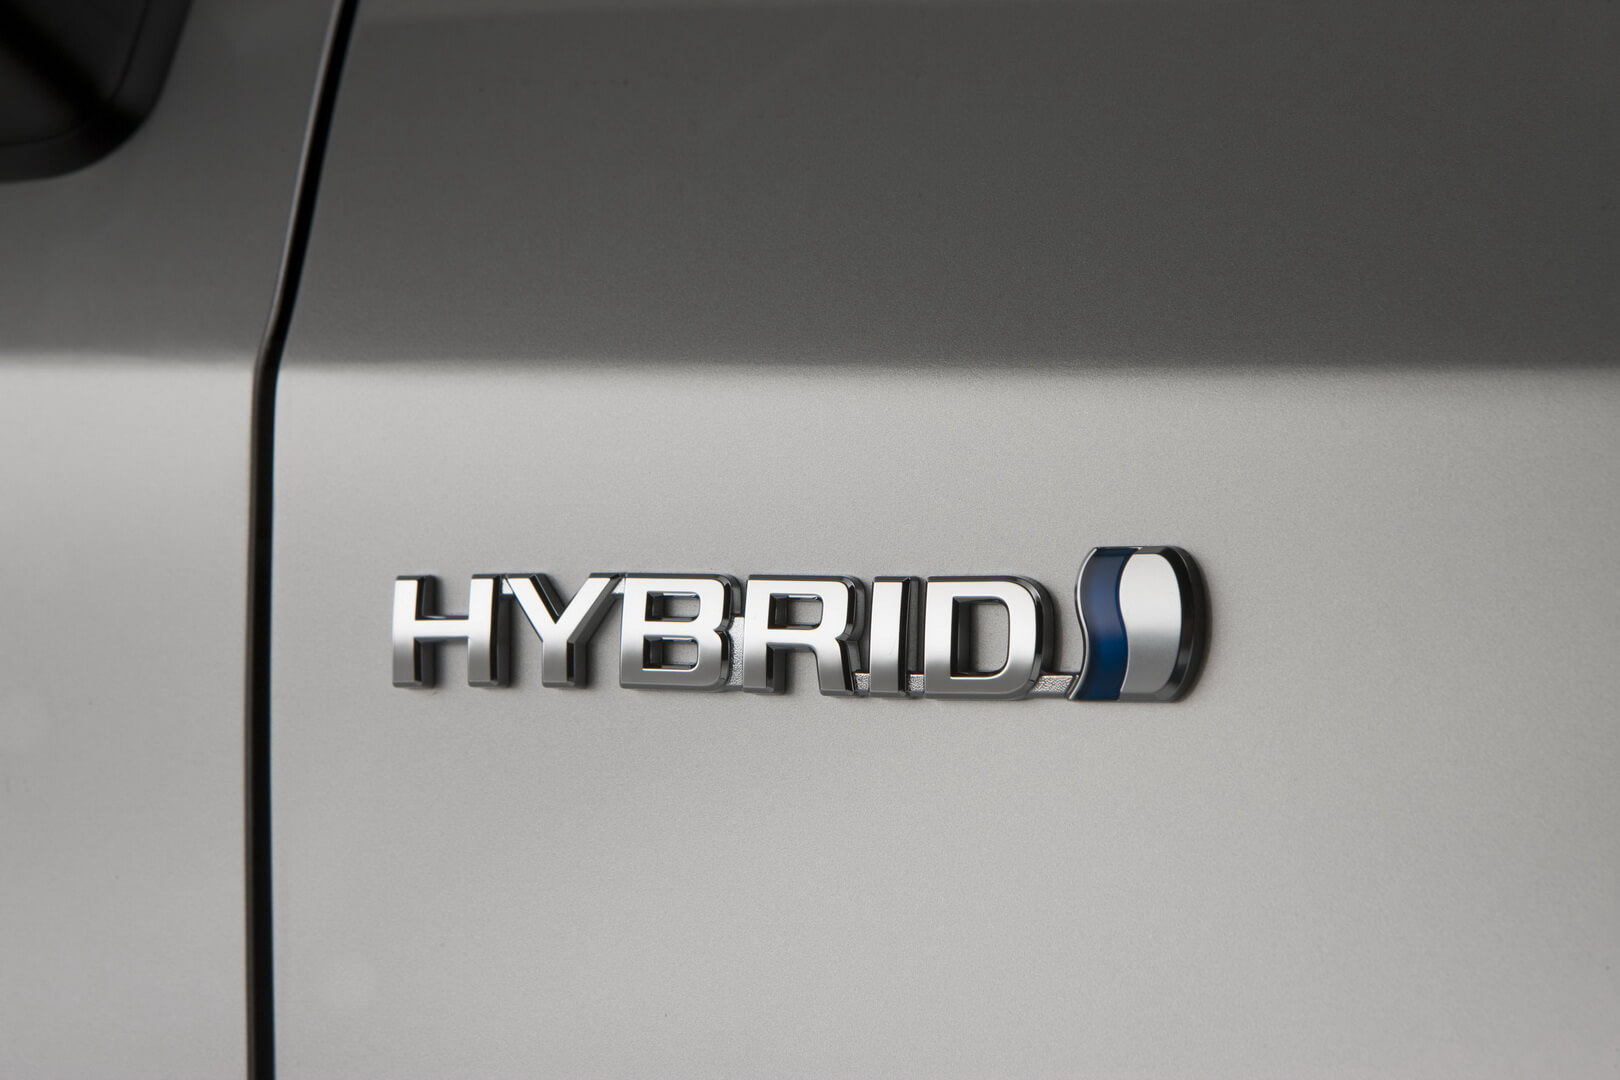 Фотография экоавто Toyota Prius Hybrid 2010 - фото 7